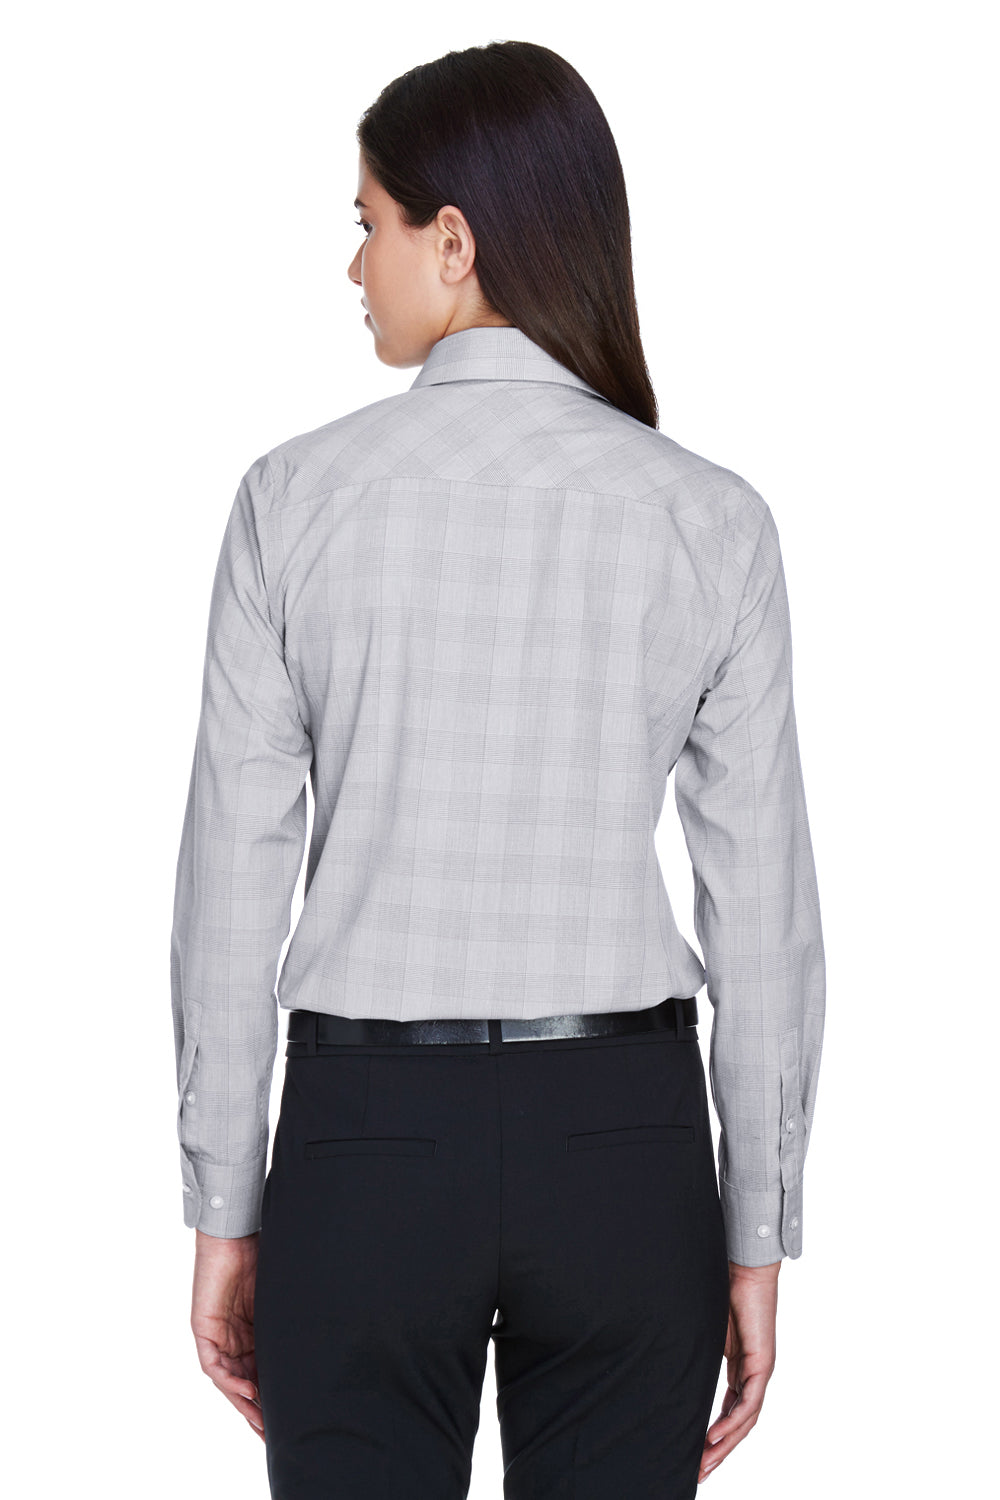 Devon & Jones DG520W Womens Crown Woven Collection Wrinkle Resistant Long Sleeve Button Down Shirt White/Graphite Grey/Light Graphite Back